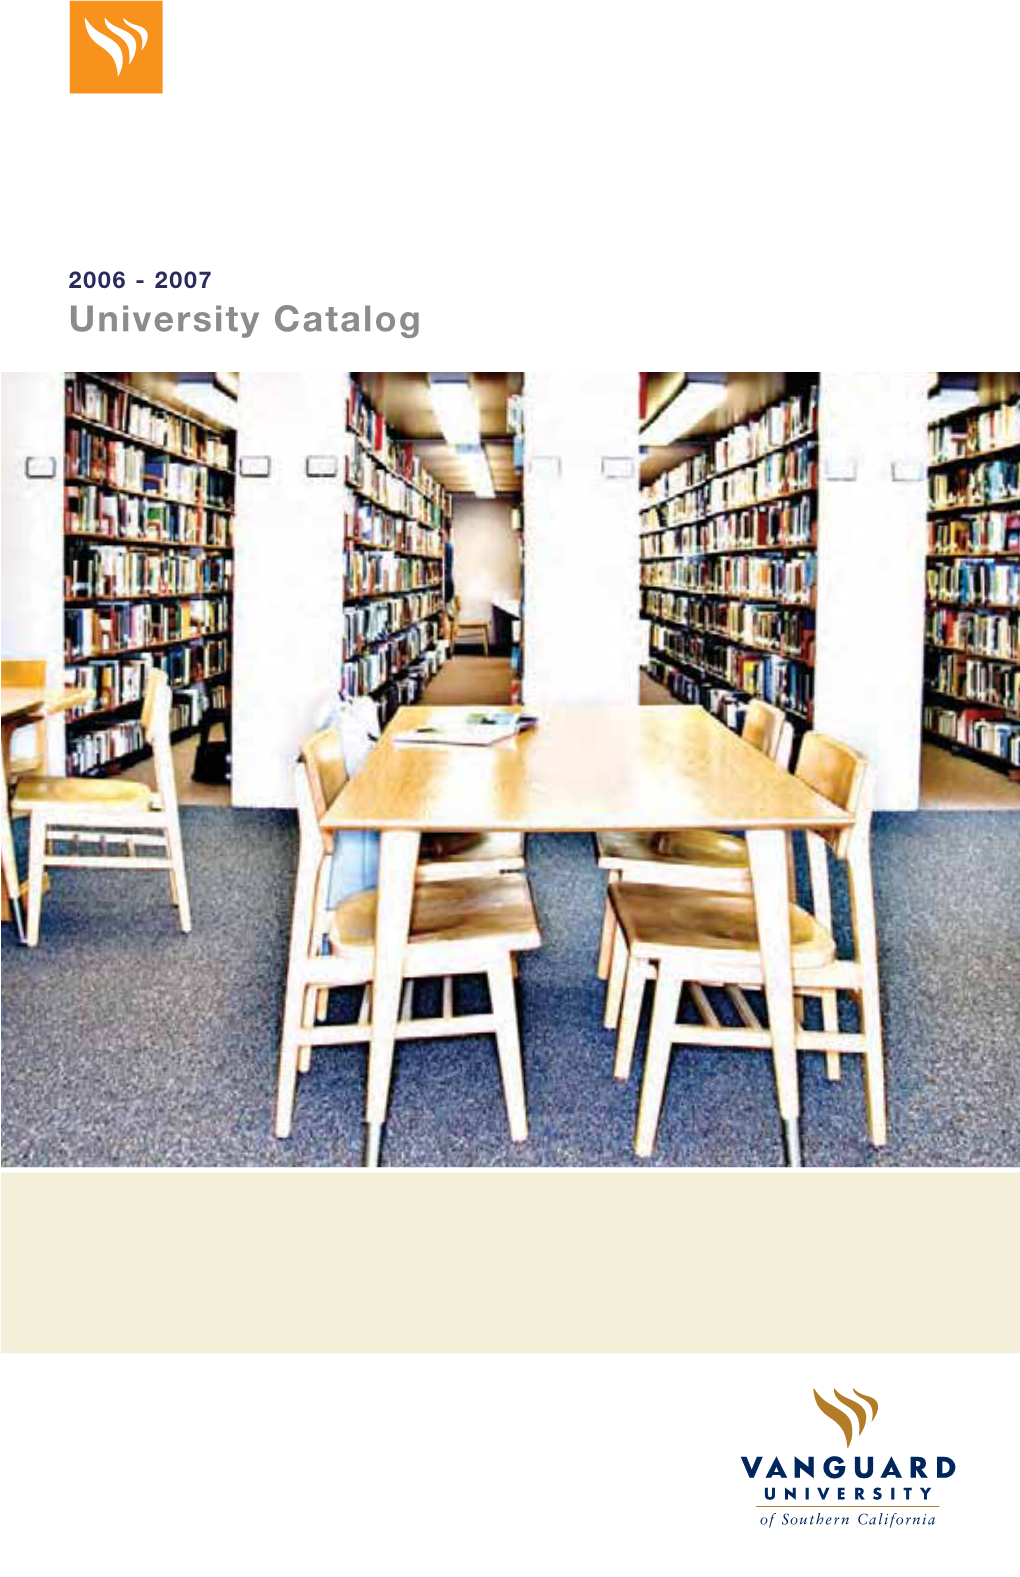 University Catalog 2006 - 2007